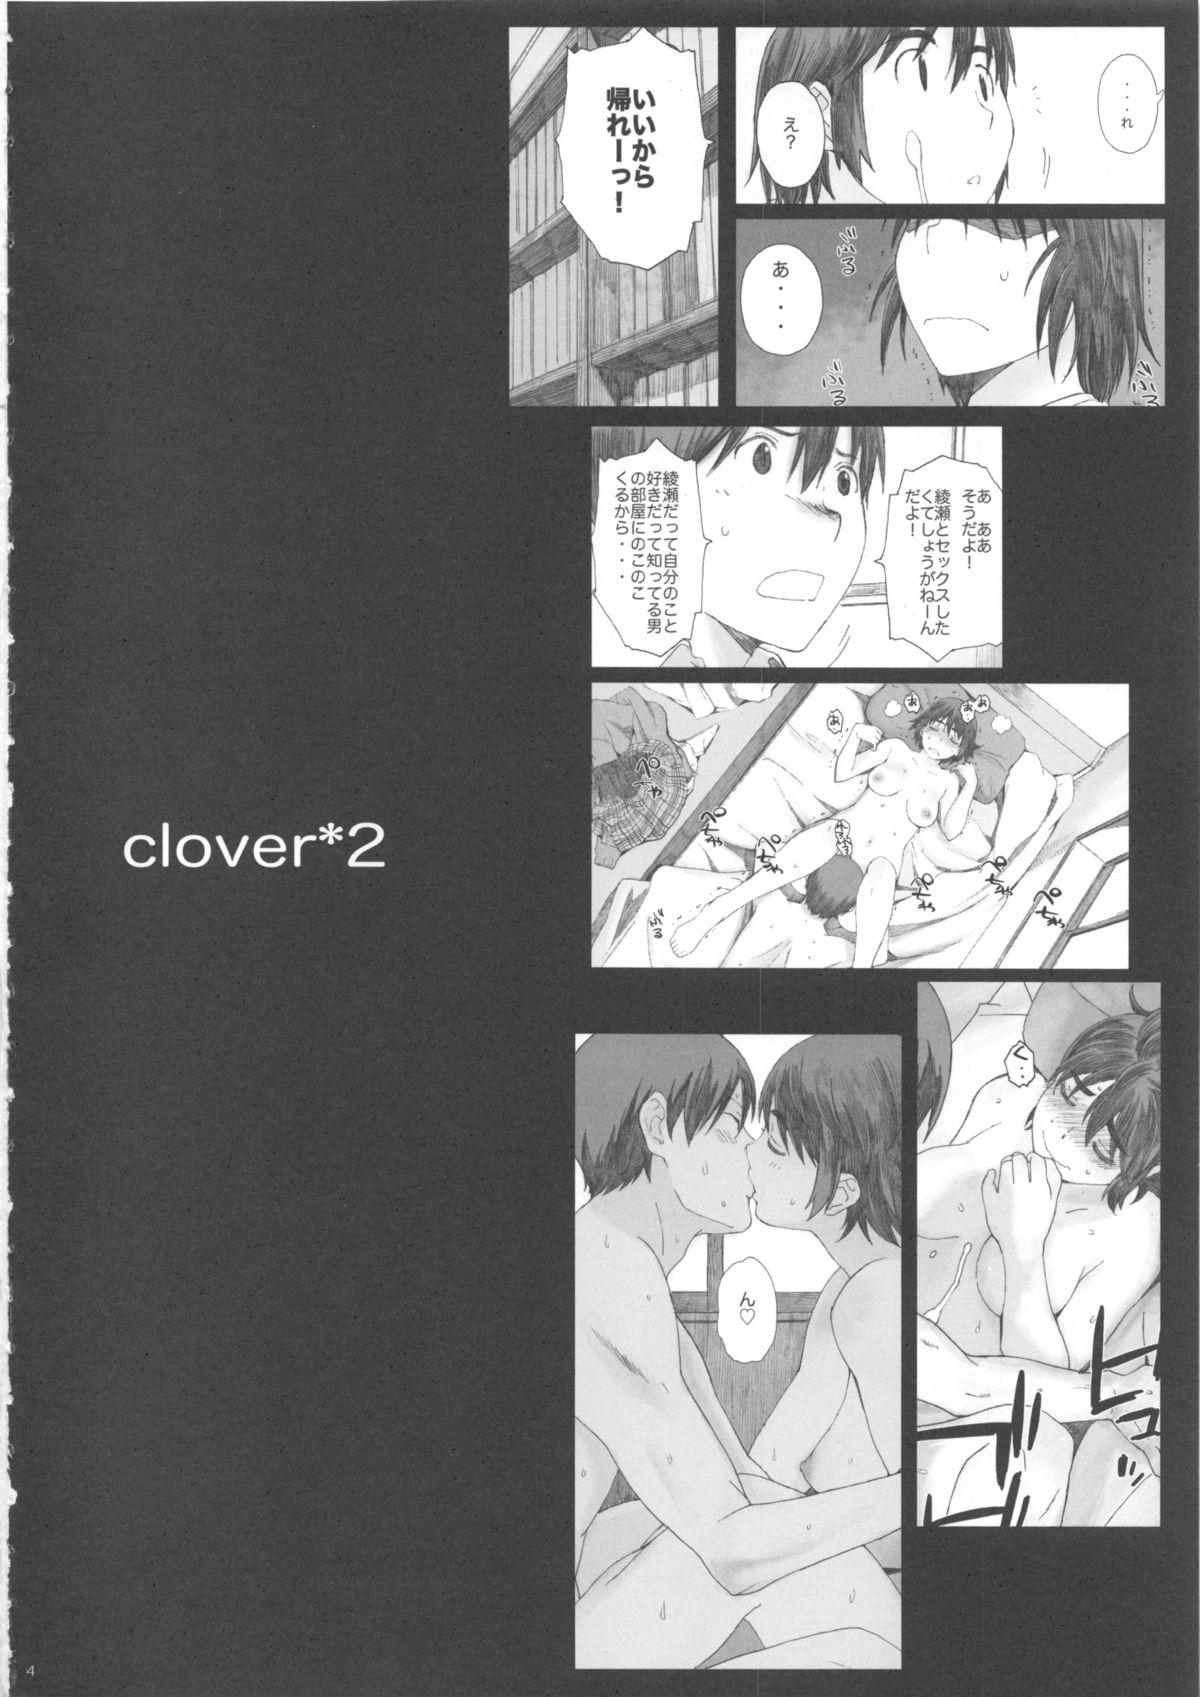 Fucked clover＊2 - Yotsubato Short - Page 4